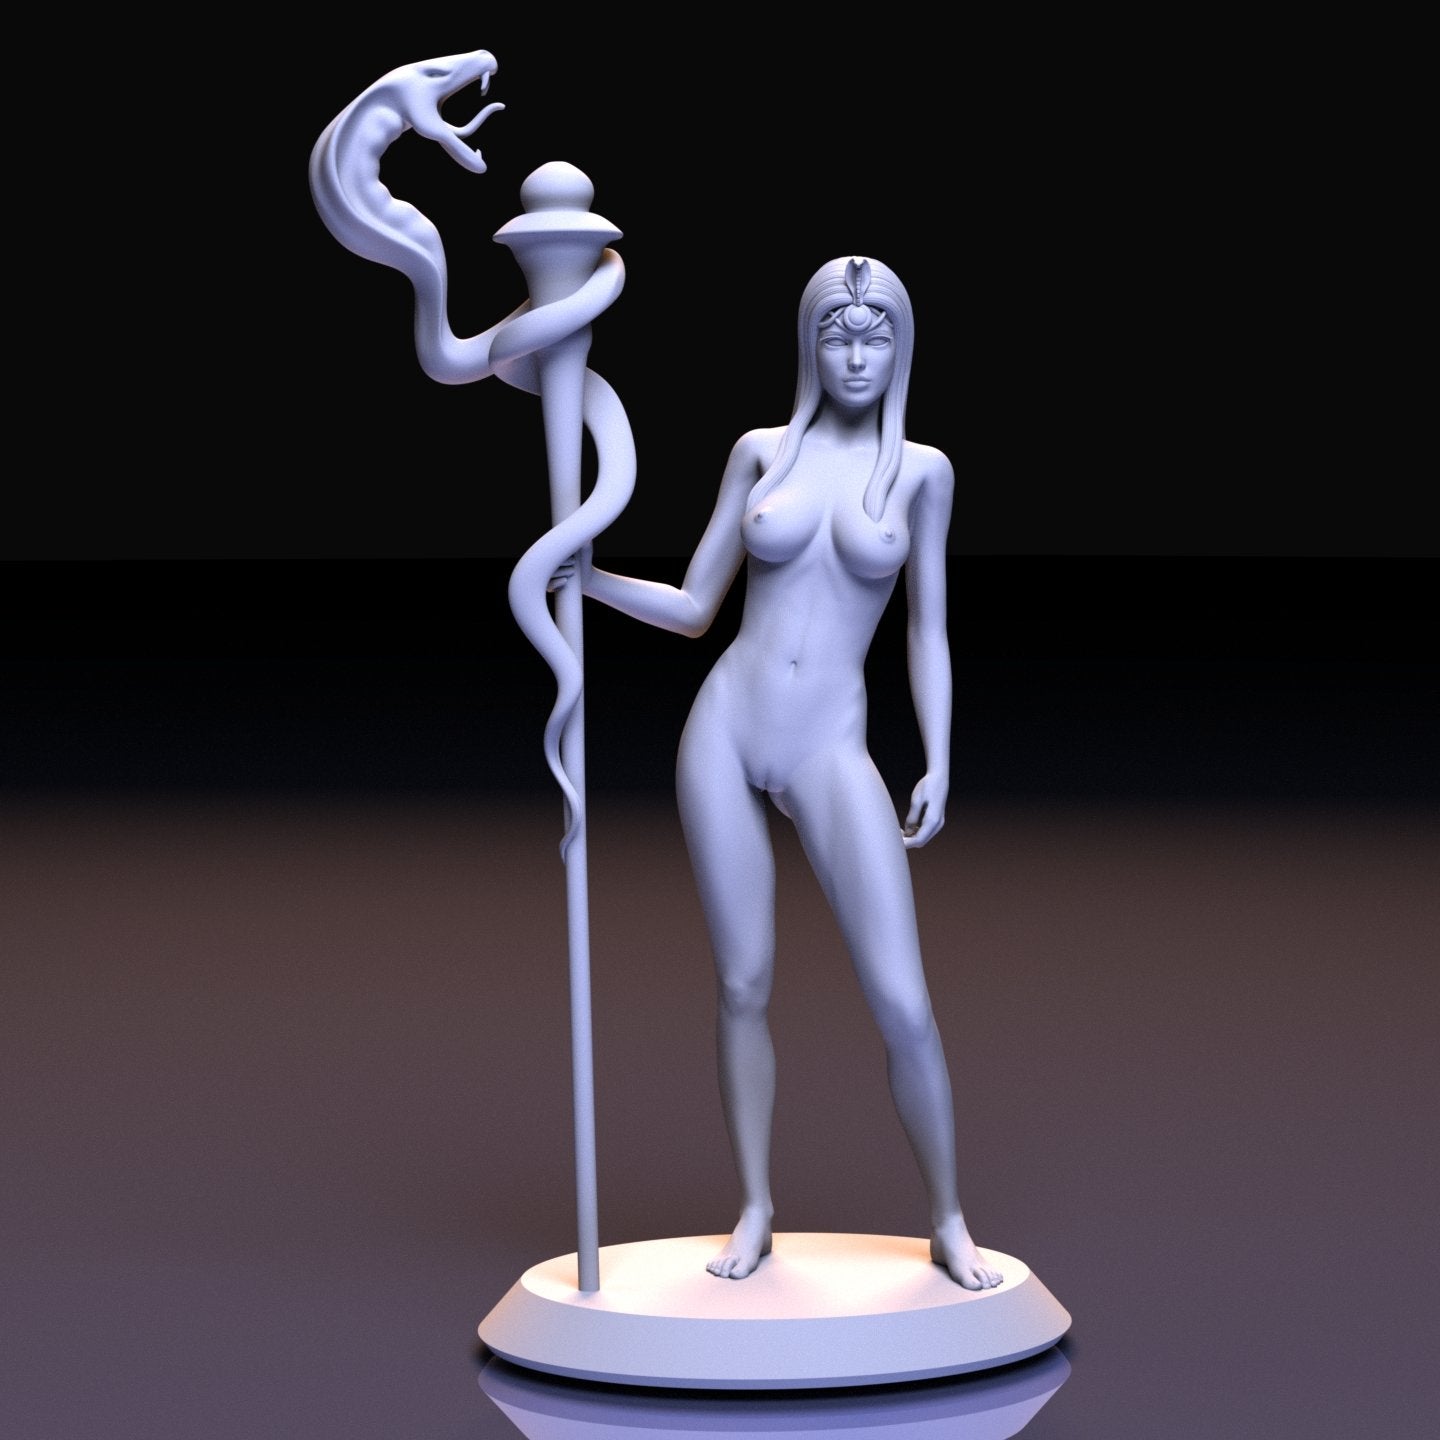 Shaman girl NSFW 3D Printed Figurine Fanart Unpainted Miniature Collectibles